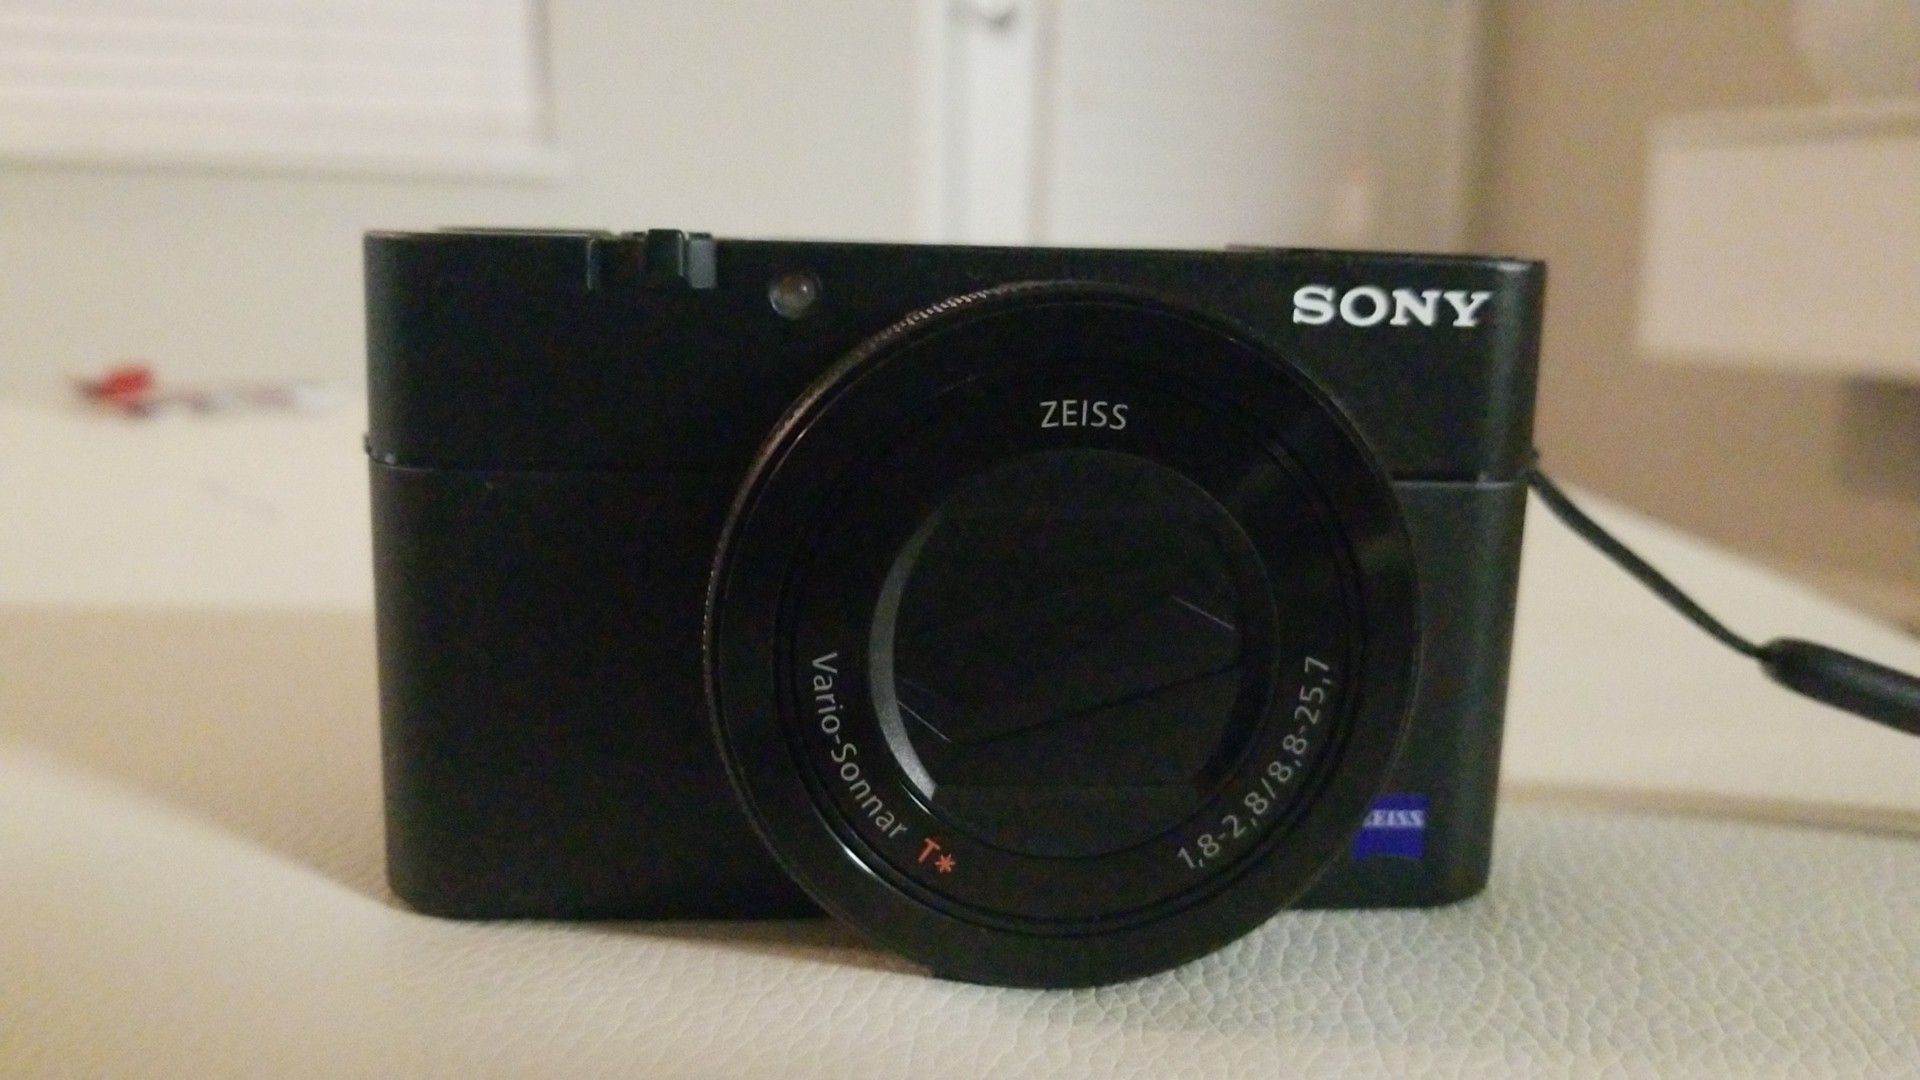 Sony Cyber-Shot DSc RX100 V 20.1 MP Digital Still Camera with 3" OLED, flip screen, WiFi and Sensor